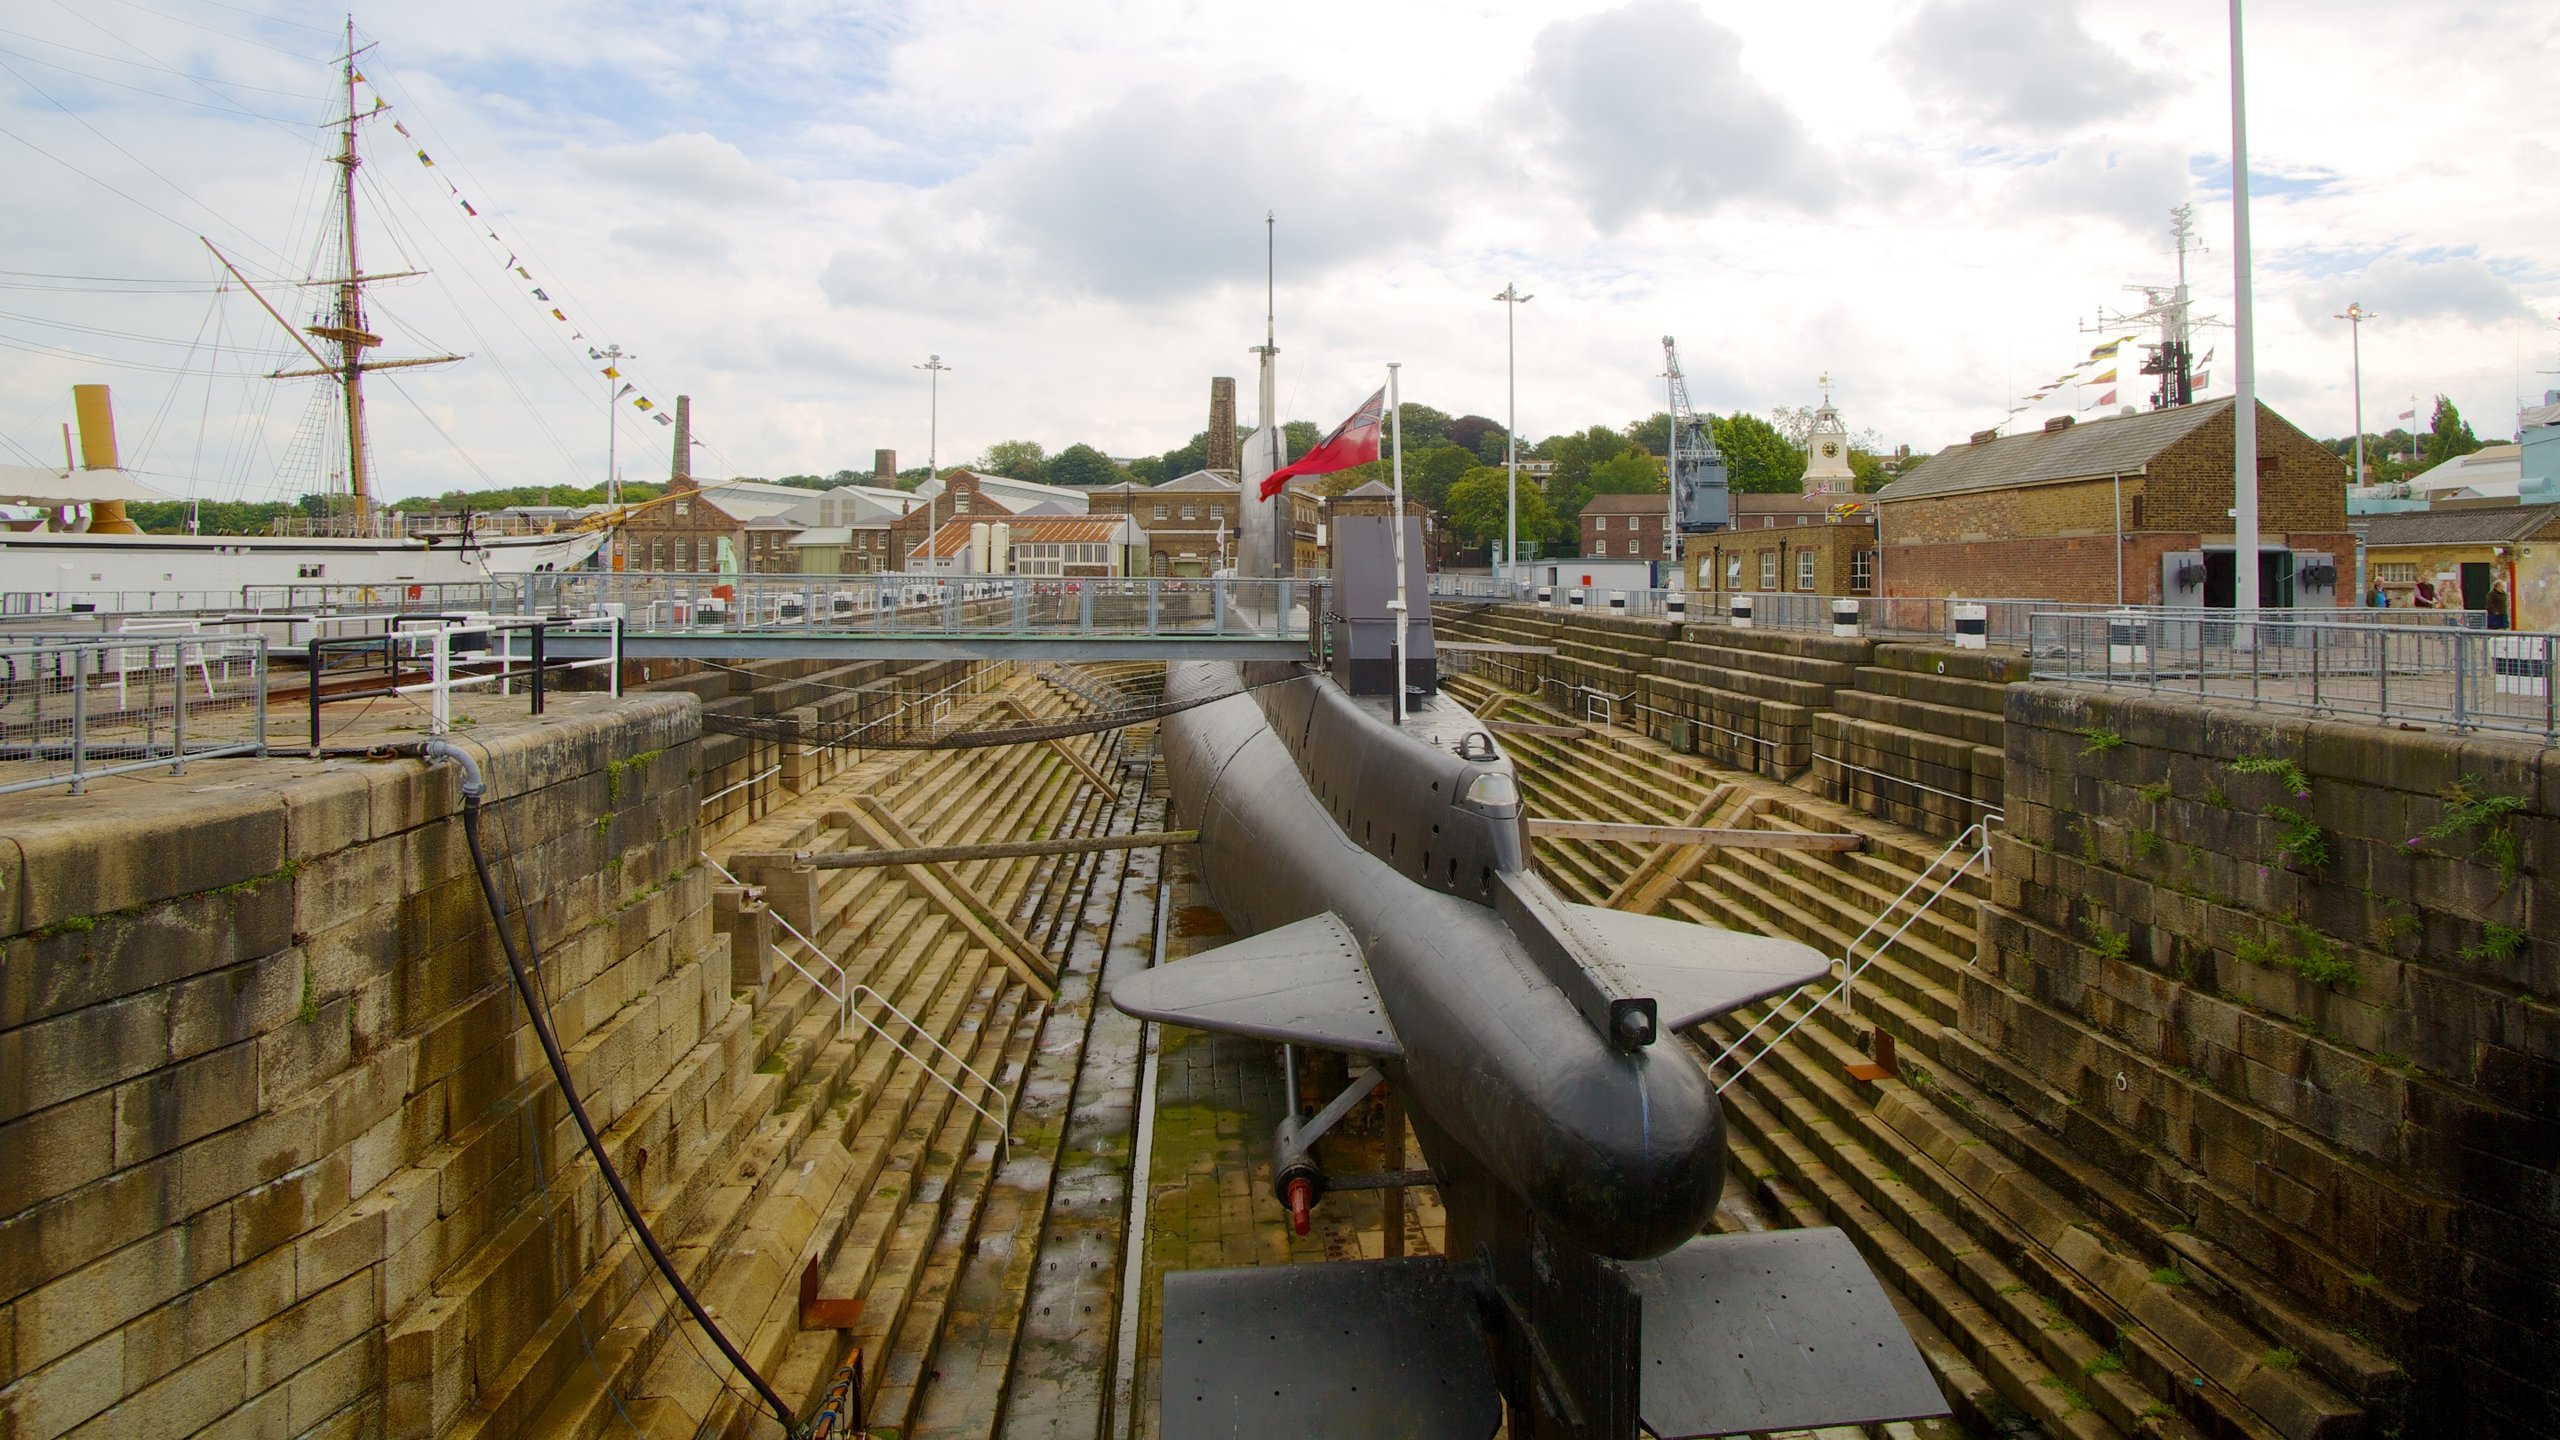 The Historic Dockyard Chatham, Chatham, England, GB